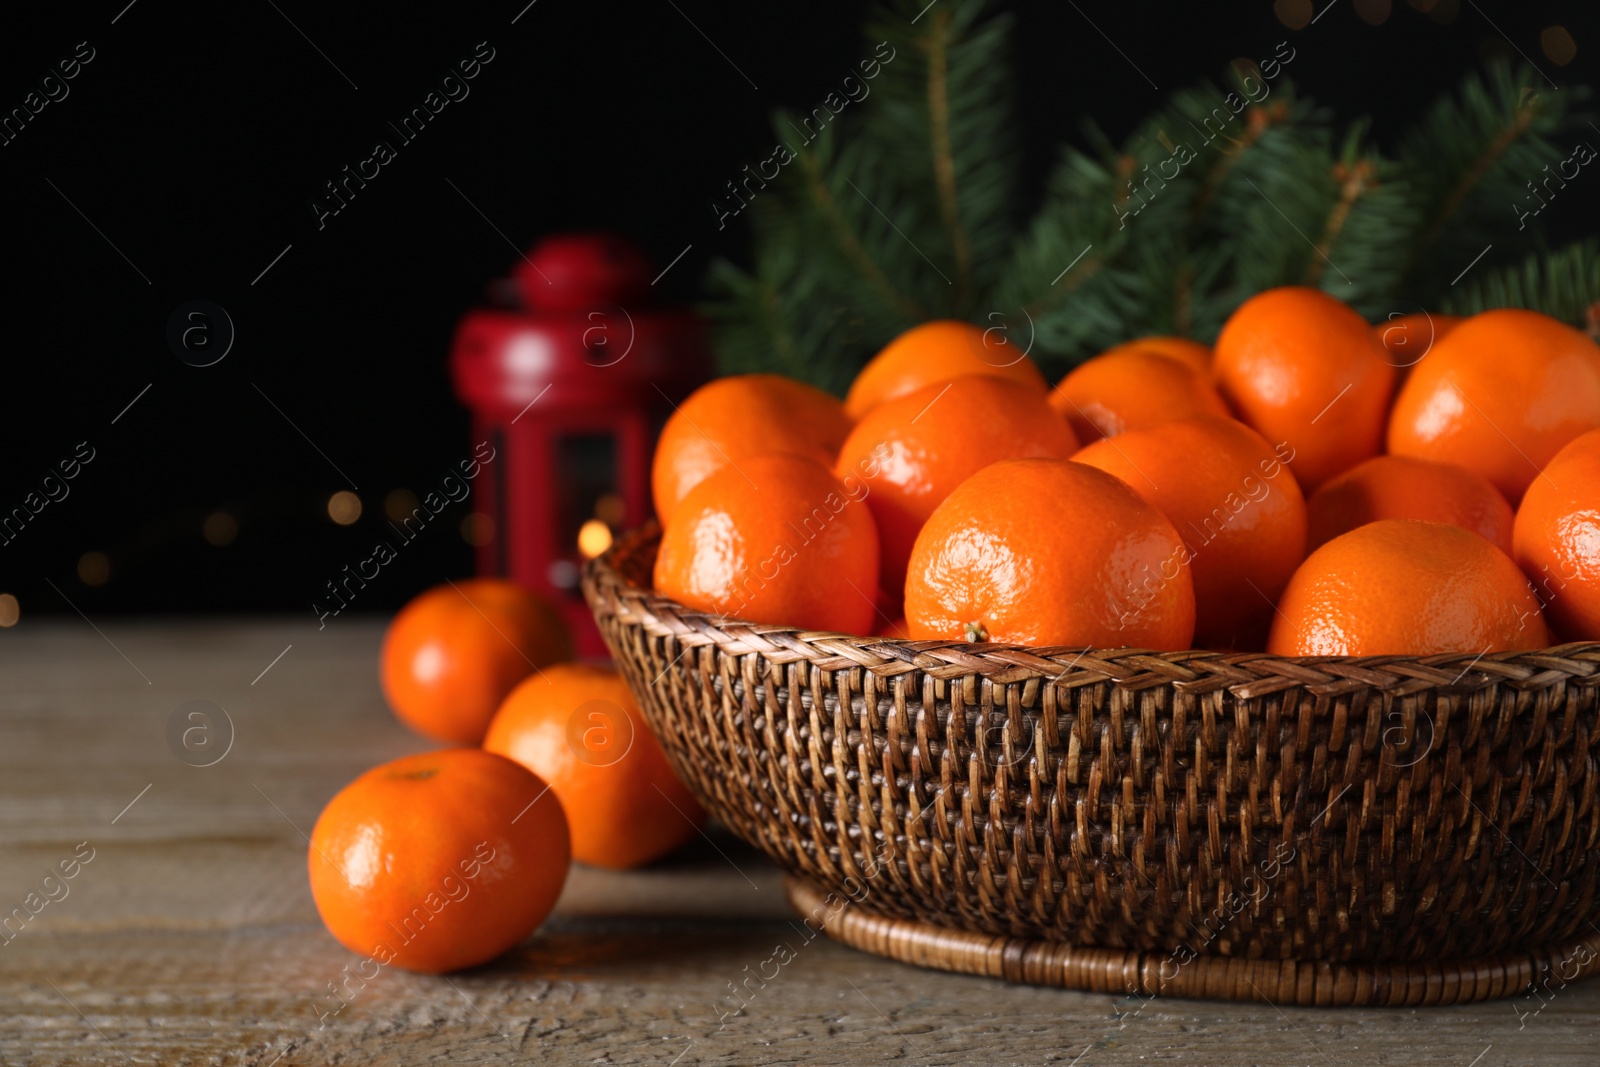 Photo of Ripe tangerines on wooden table against dark background. Christmas celebration